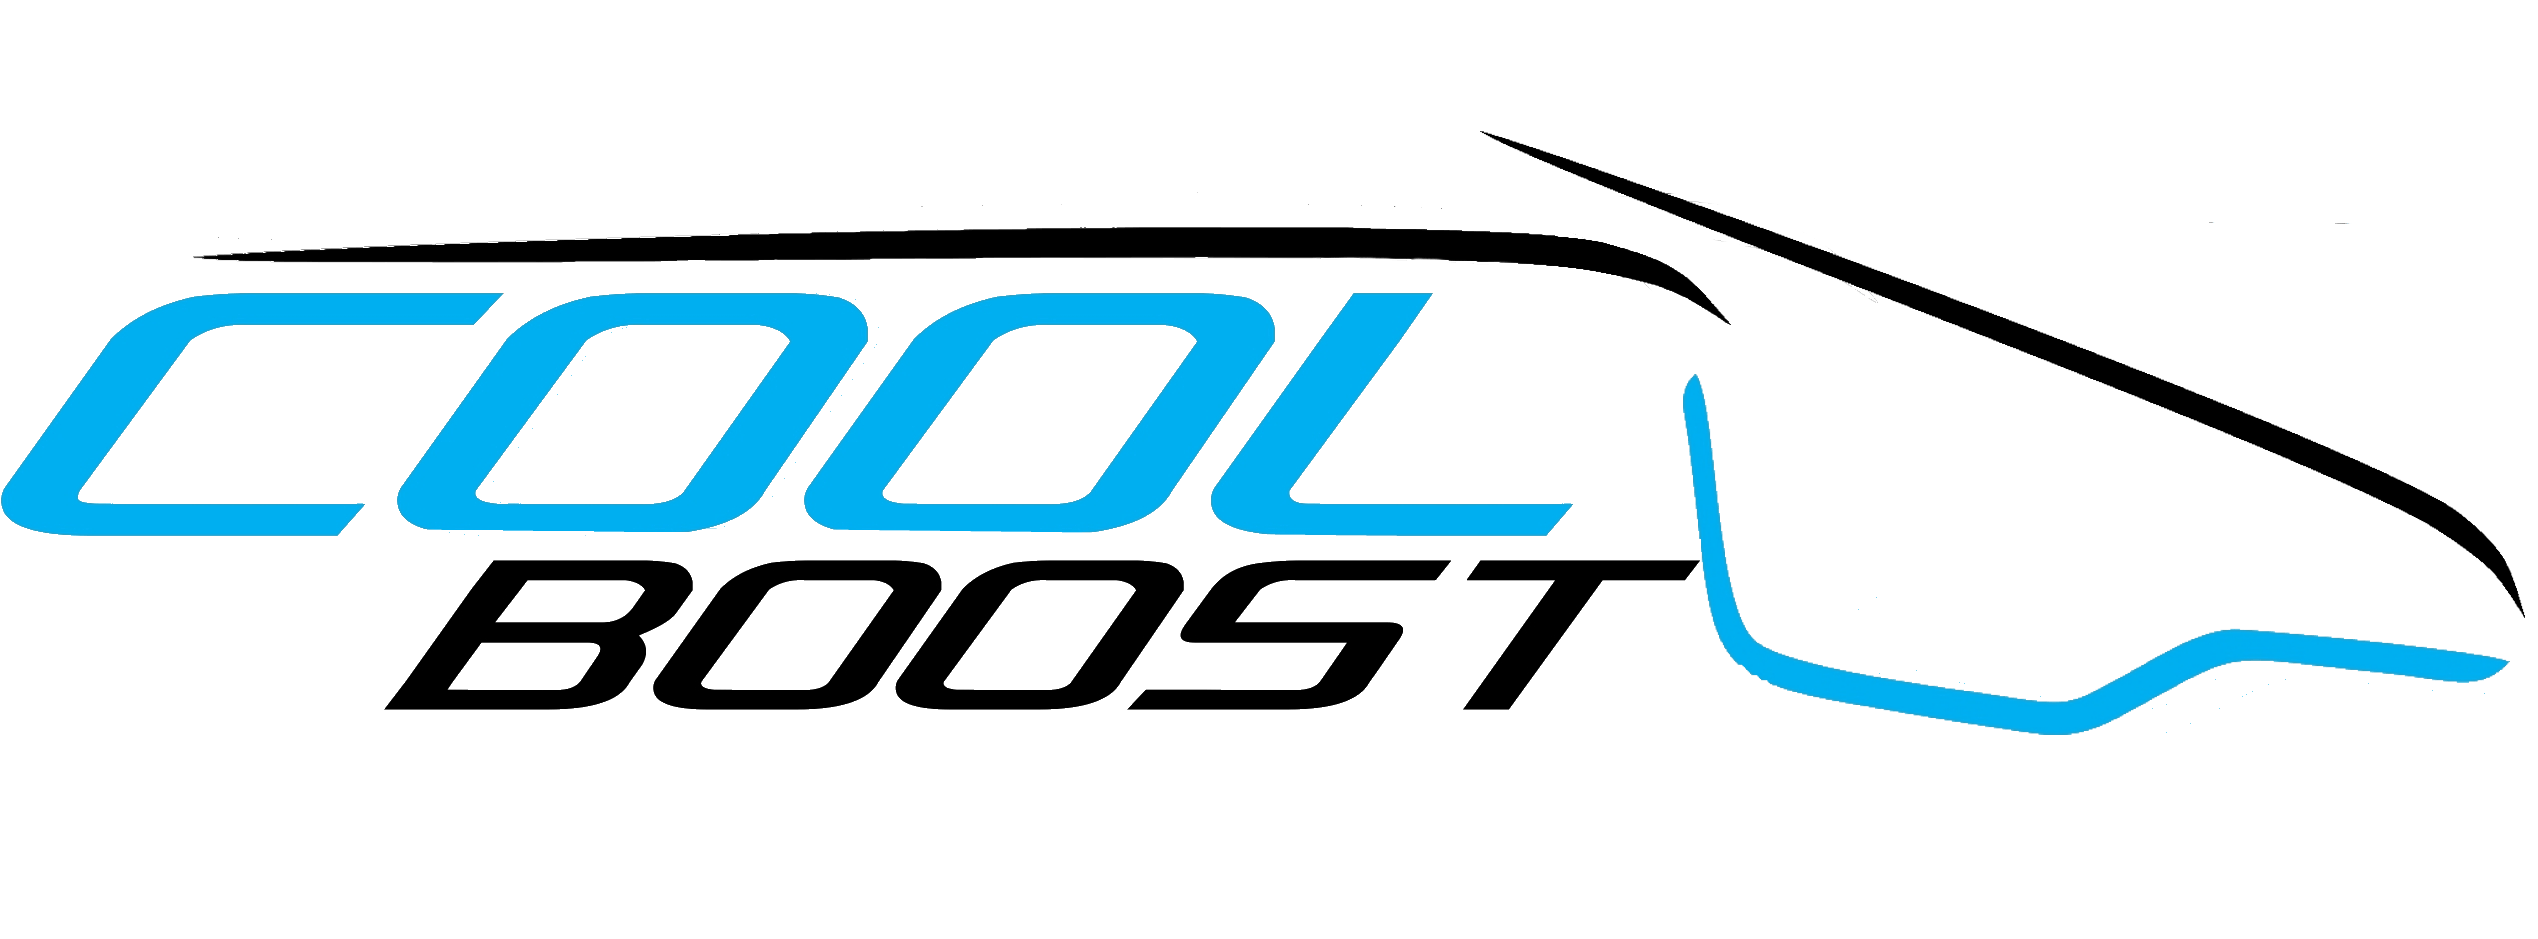 Cool Boost Logo - Animation | Film | Graphic Design | Photography | Ascendant Studio